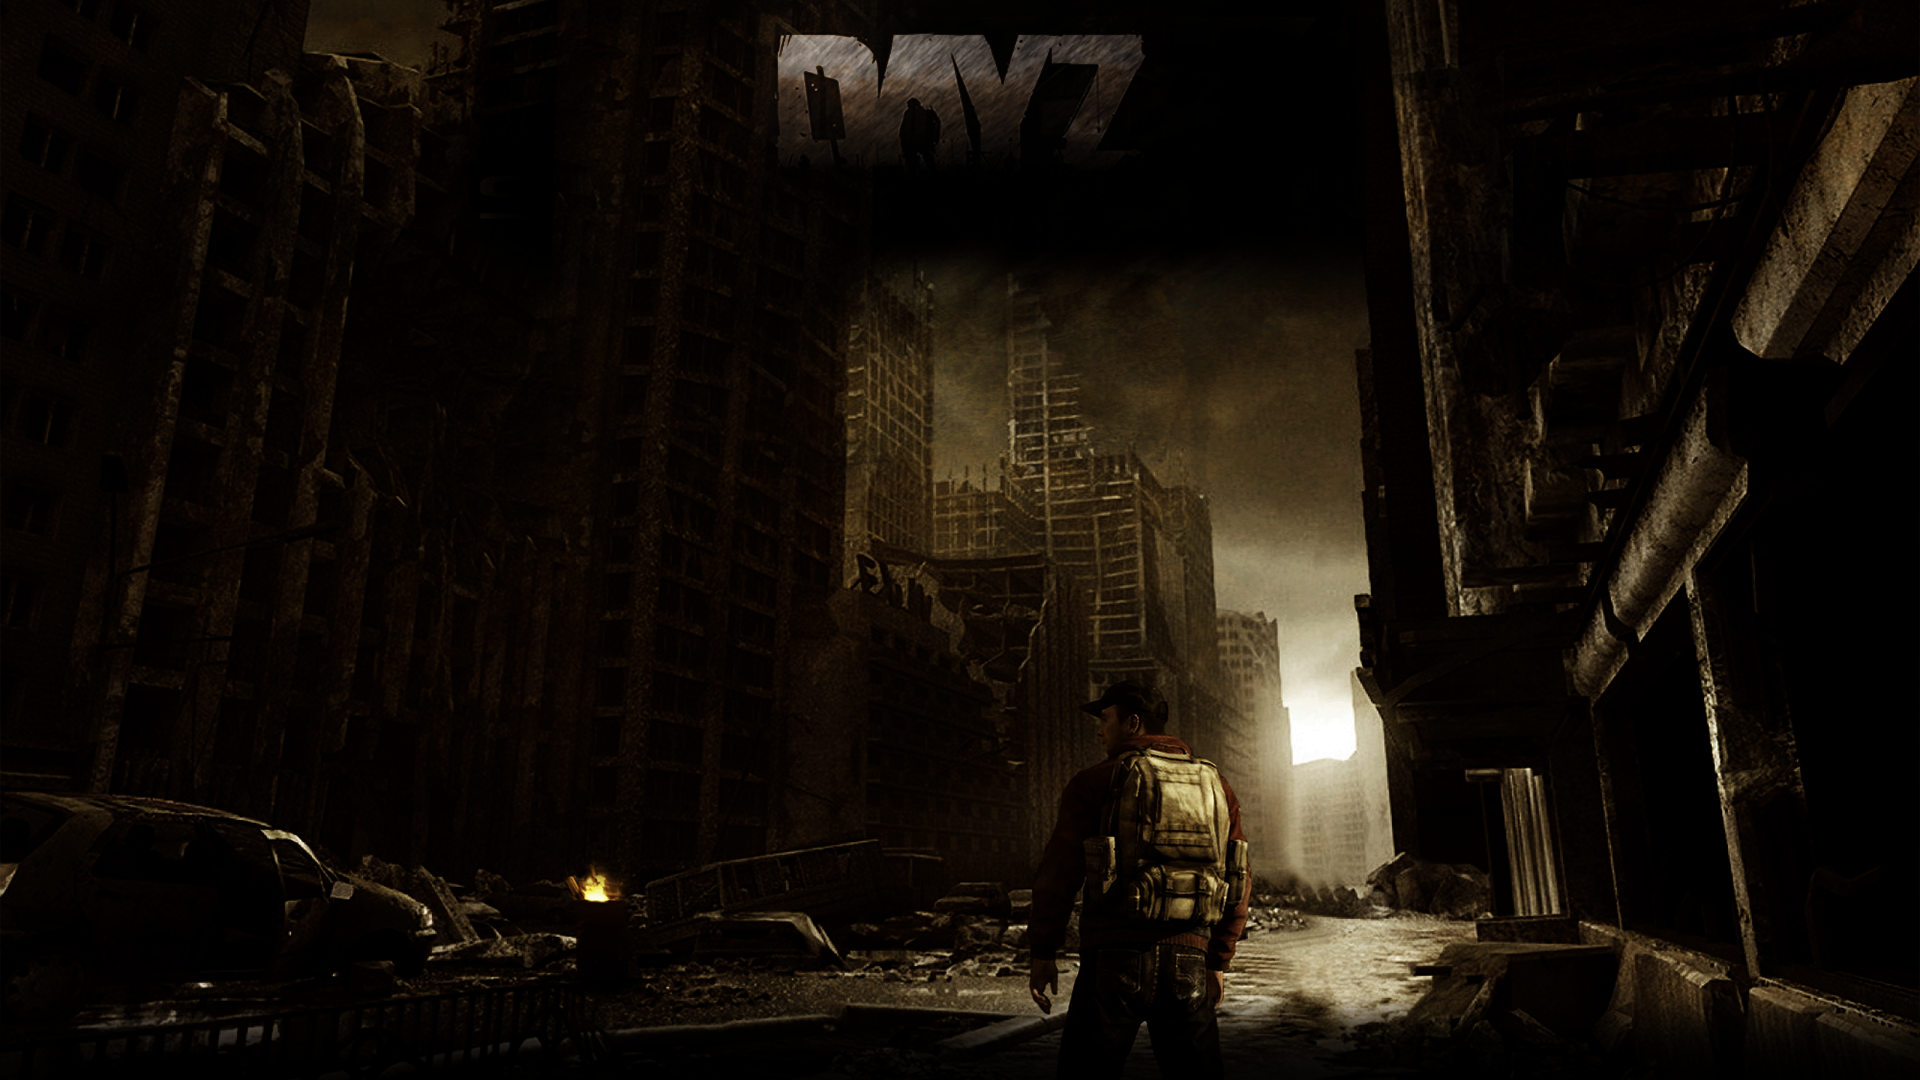 DayZ Dramatic Scene 1920x1080 Wallpaper Download by Drakai27 on DeviantArt